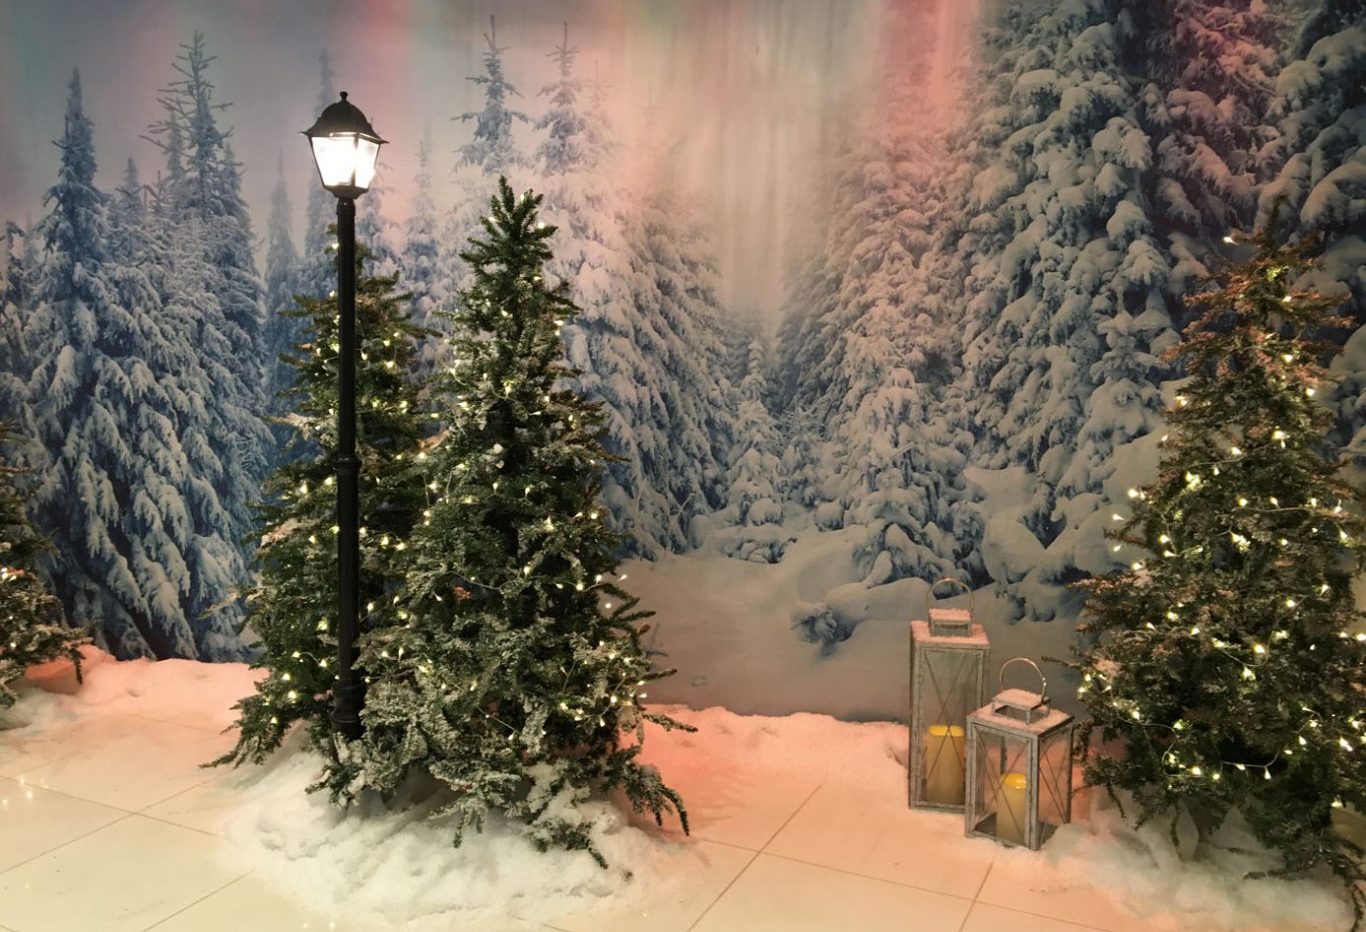 IMG 4190 e1547648958404 - Narnia Themed Christmas Sales Conference